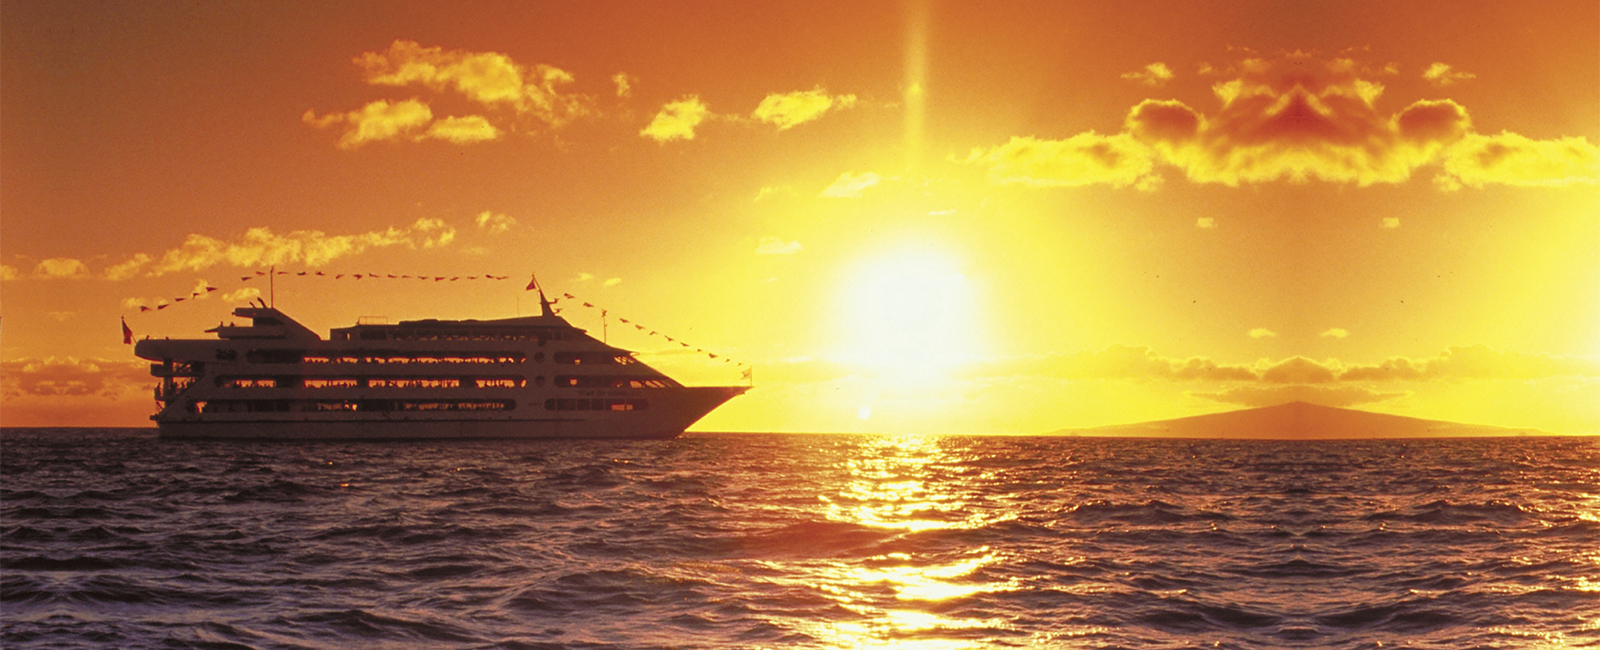 The sun sets behind the Honolulu dinner cruise ship, The Star of Honolulu.